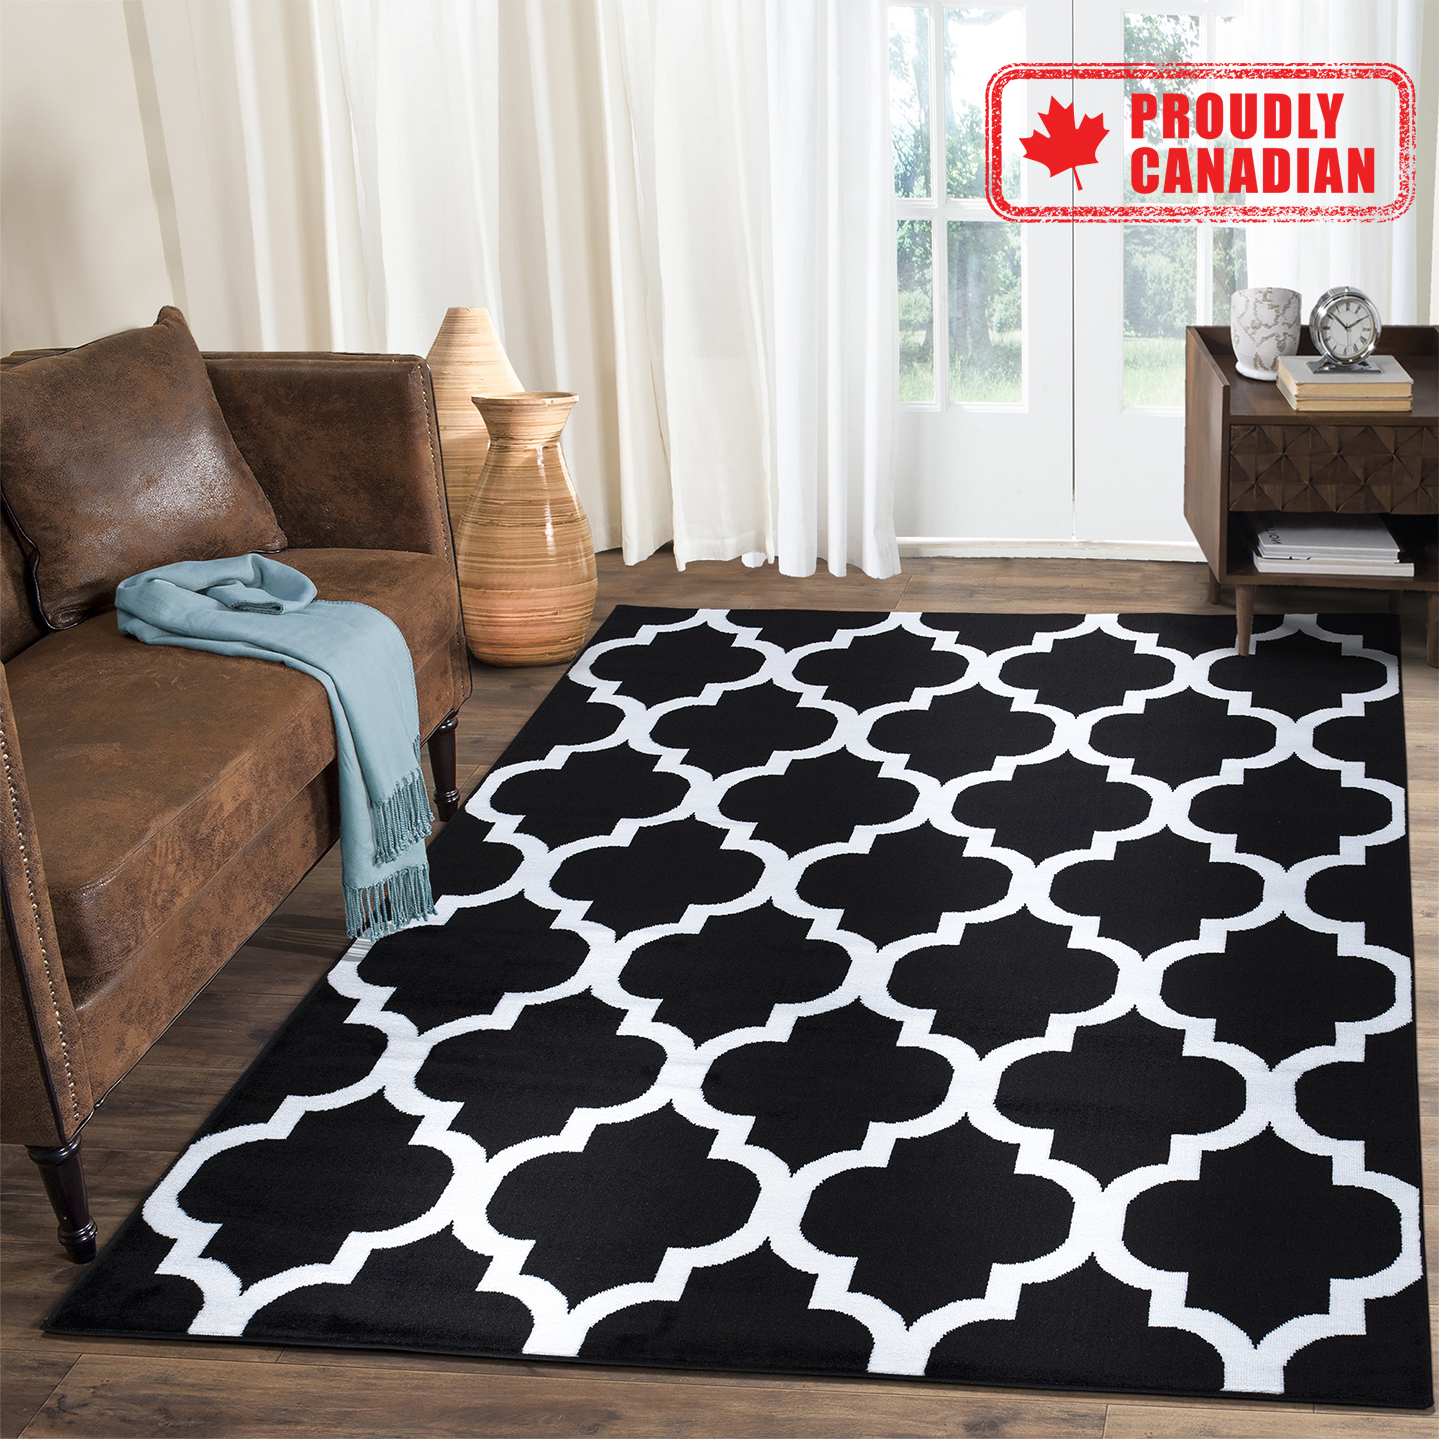 A2Z Natural Trellis Trendy Soft Hallway Runner Area Rug Carpet Tapis (3x5  4x6 5x7 5x8 7x9 8x10)